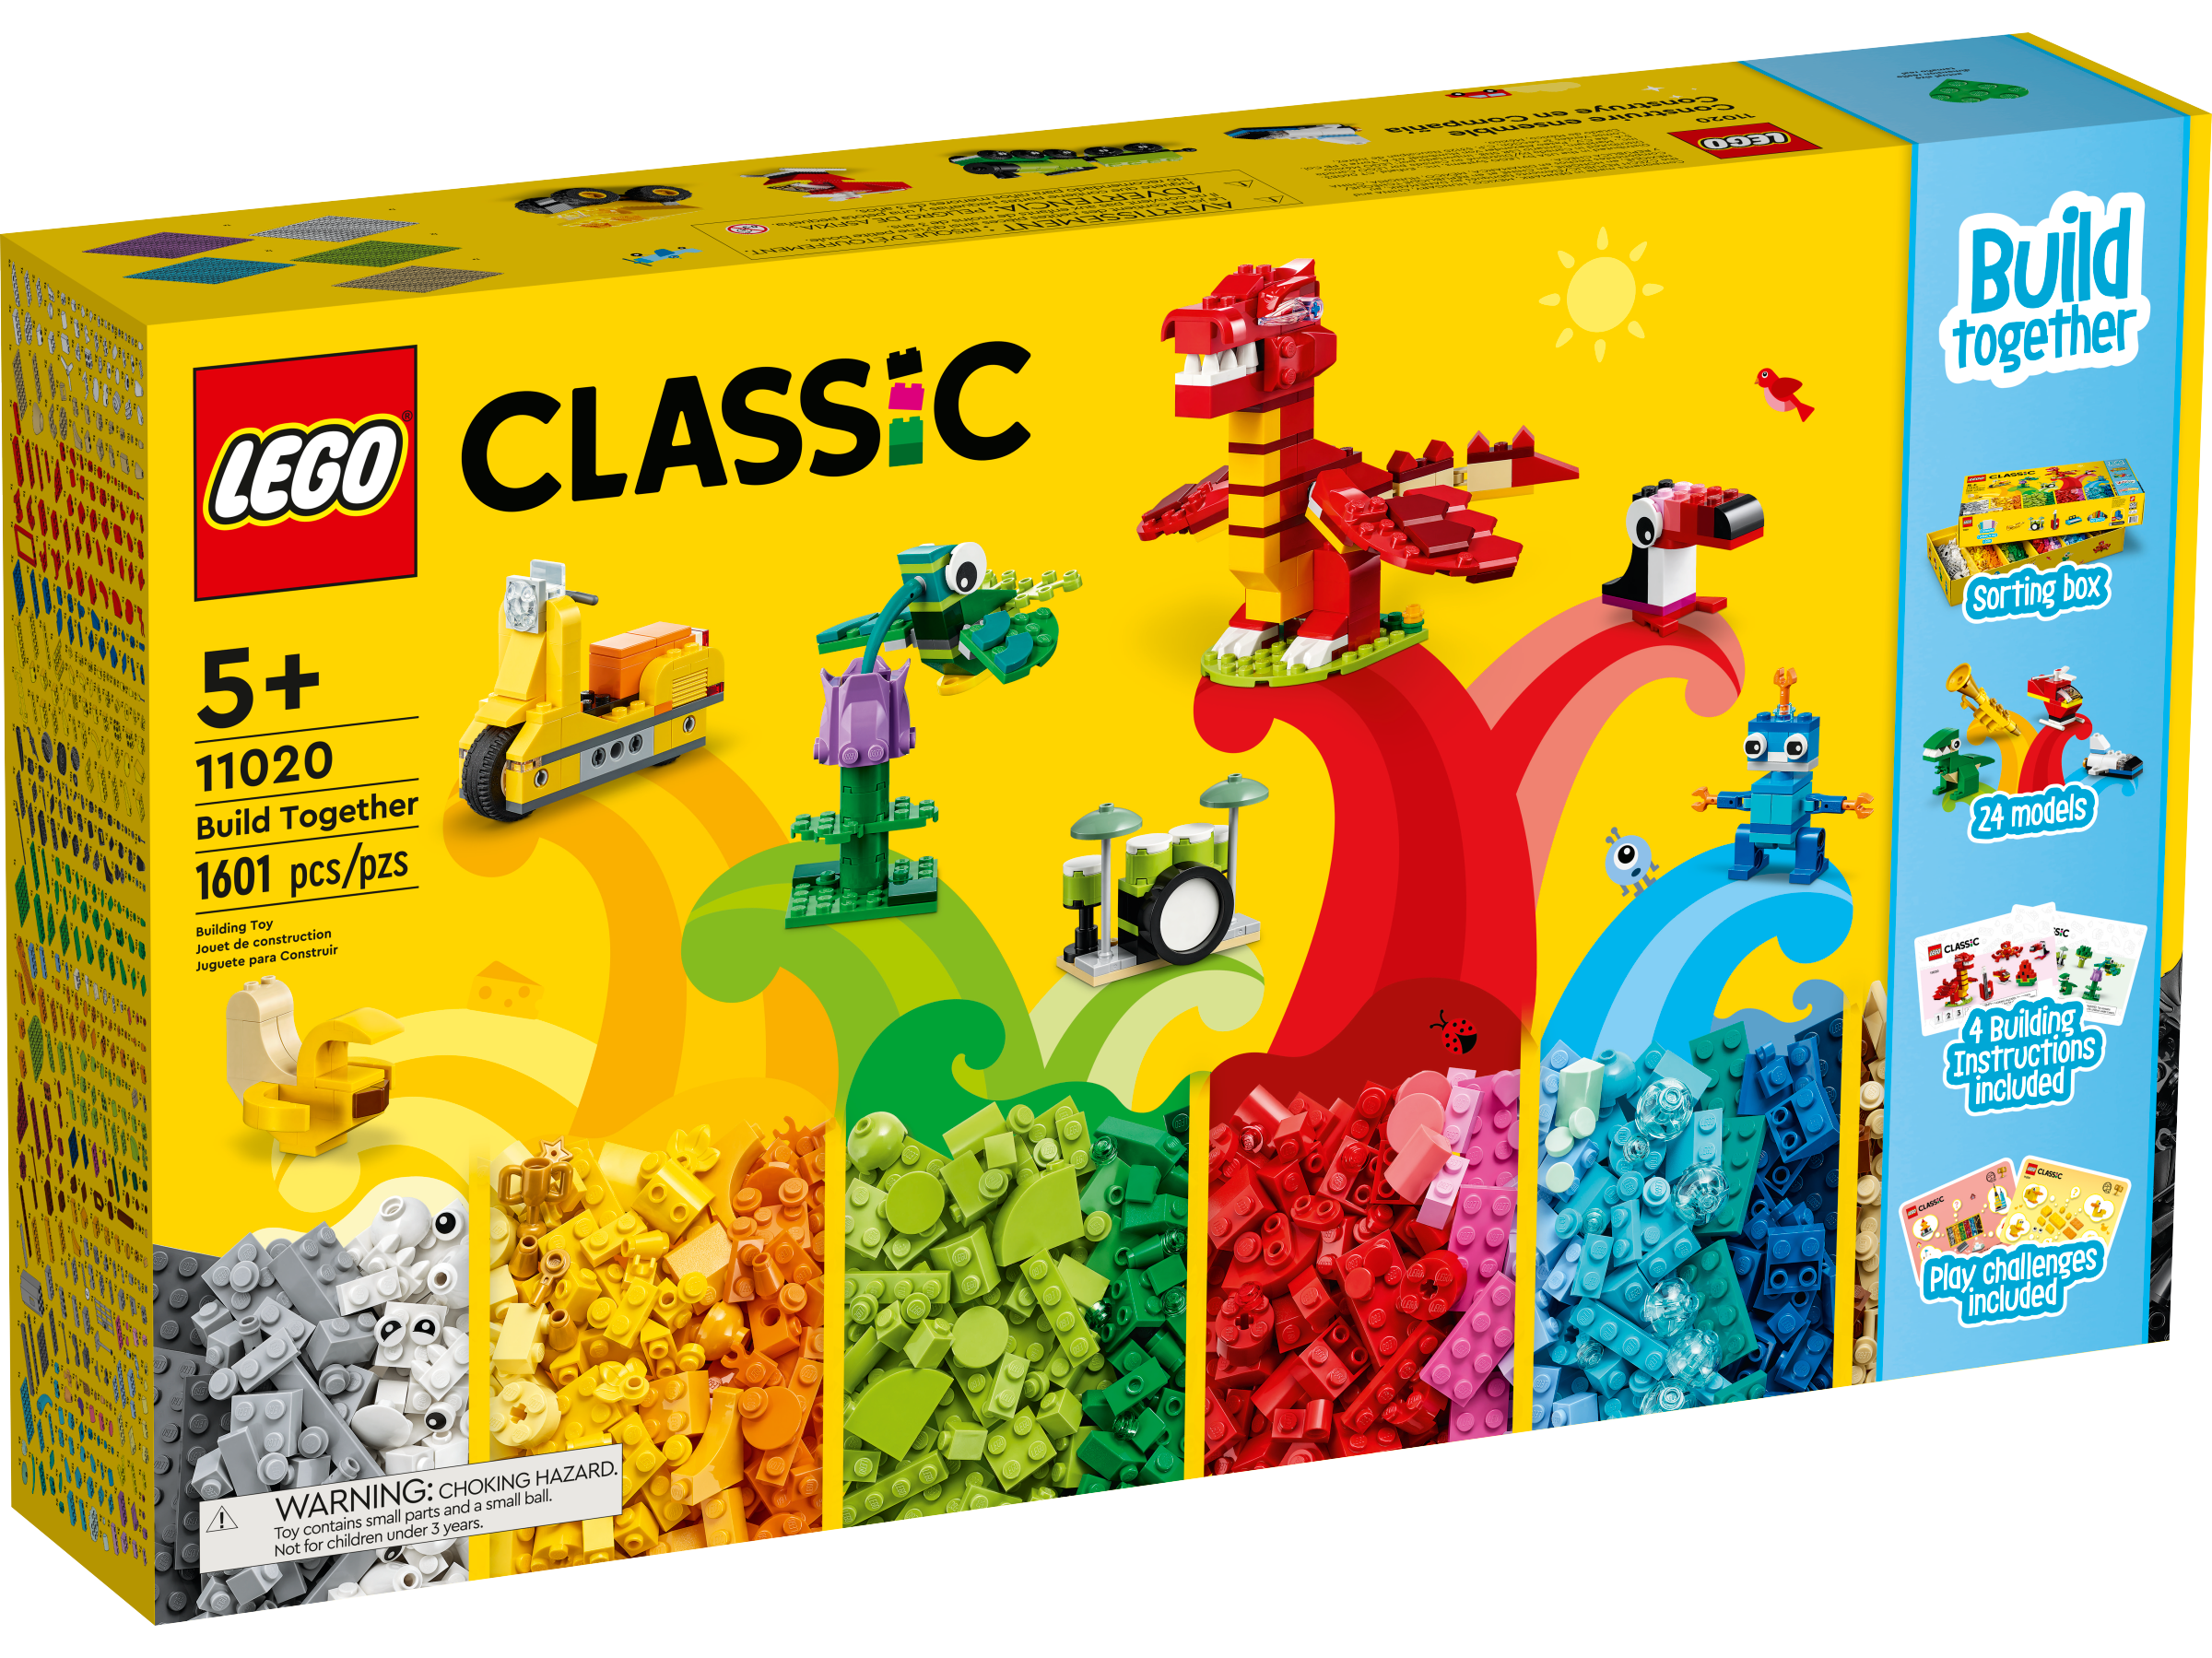 Lego 10709 - Boîte de construction orange